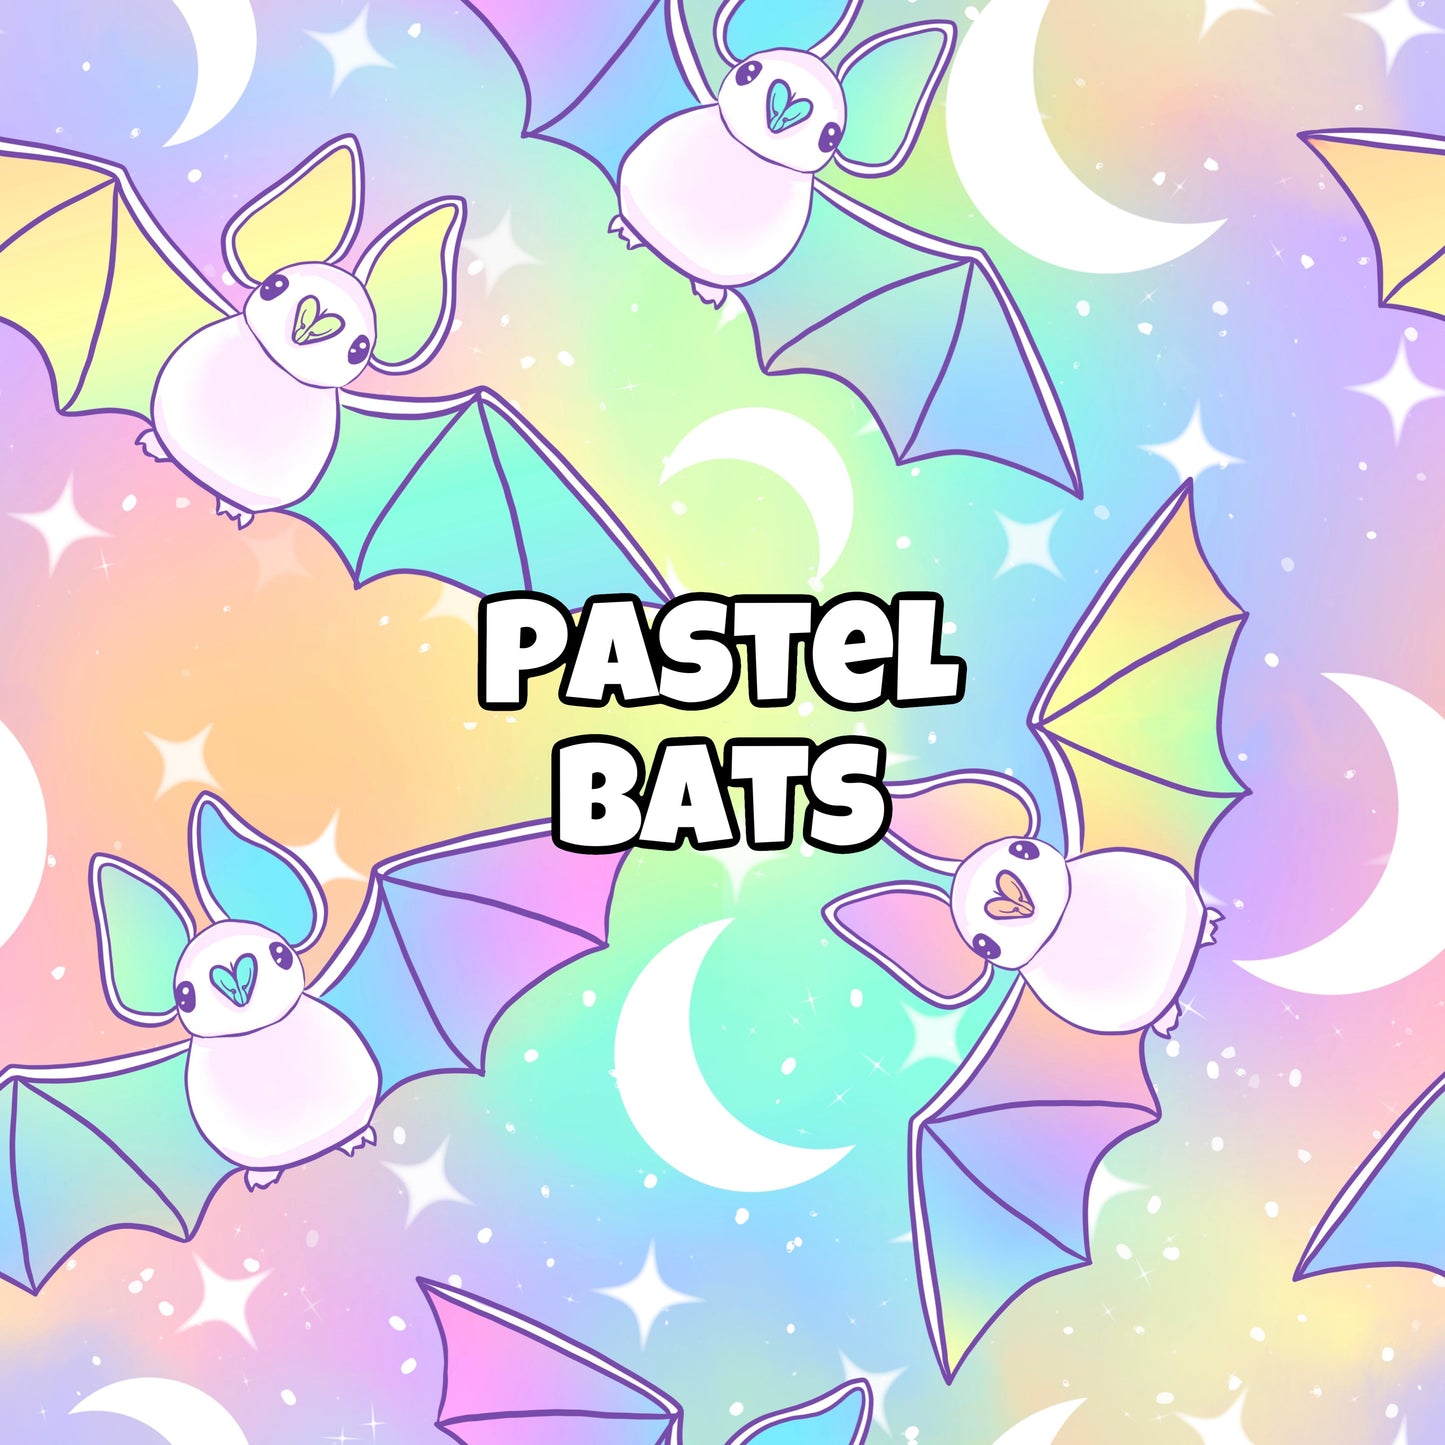 PASTEL BATS